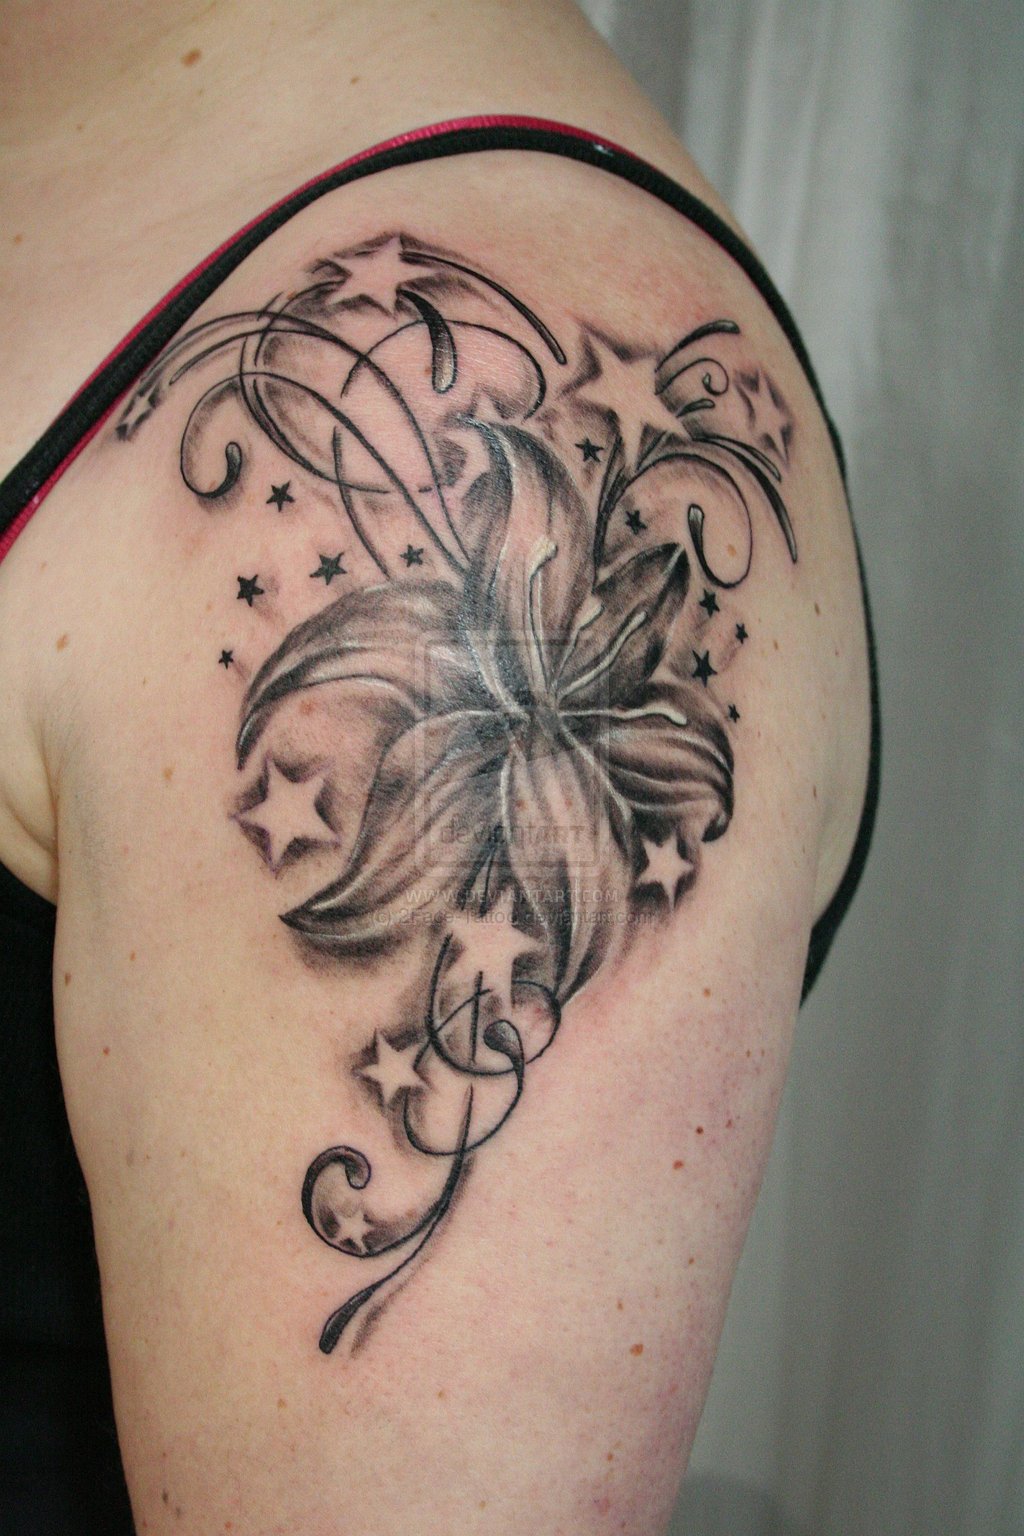 The Best Tattoo: Flower Tattoo Design Ideas